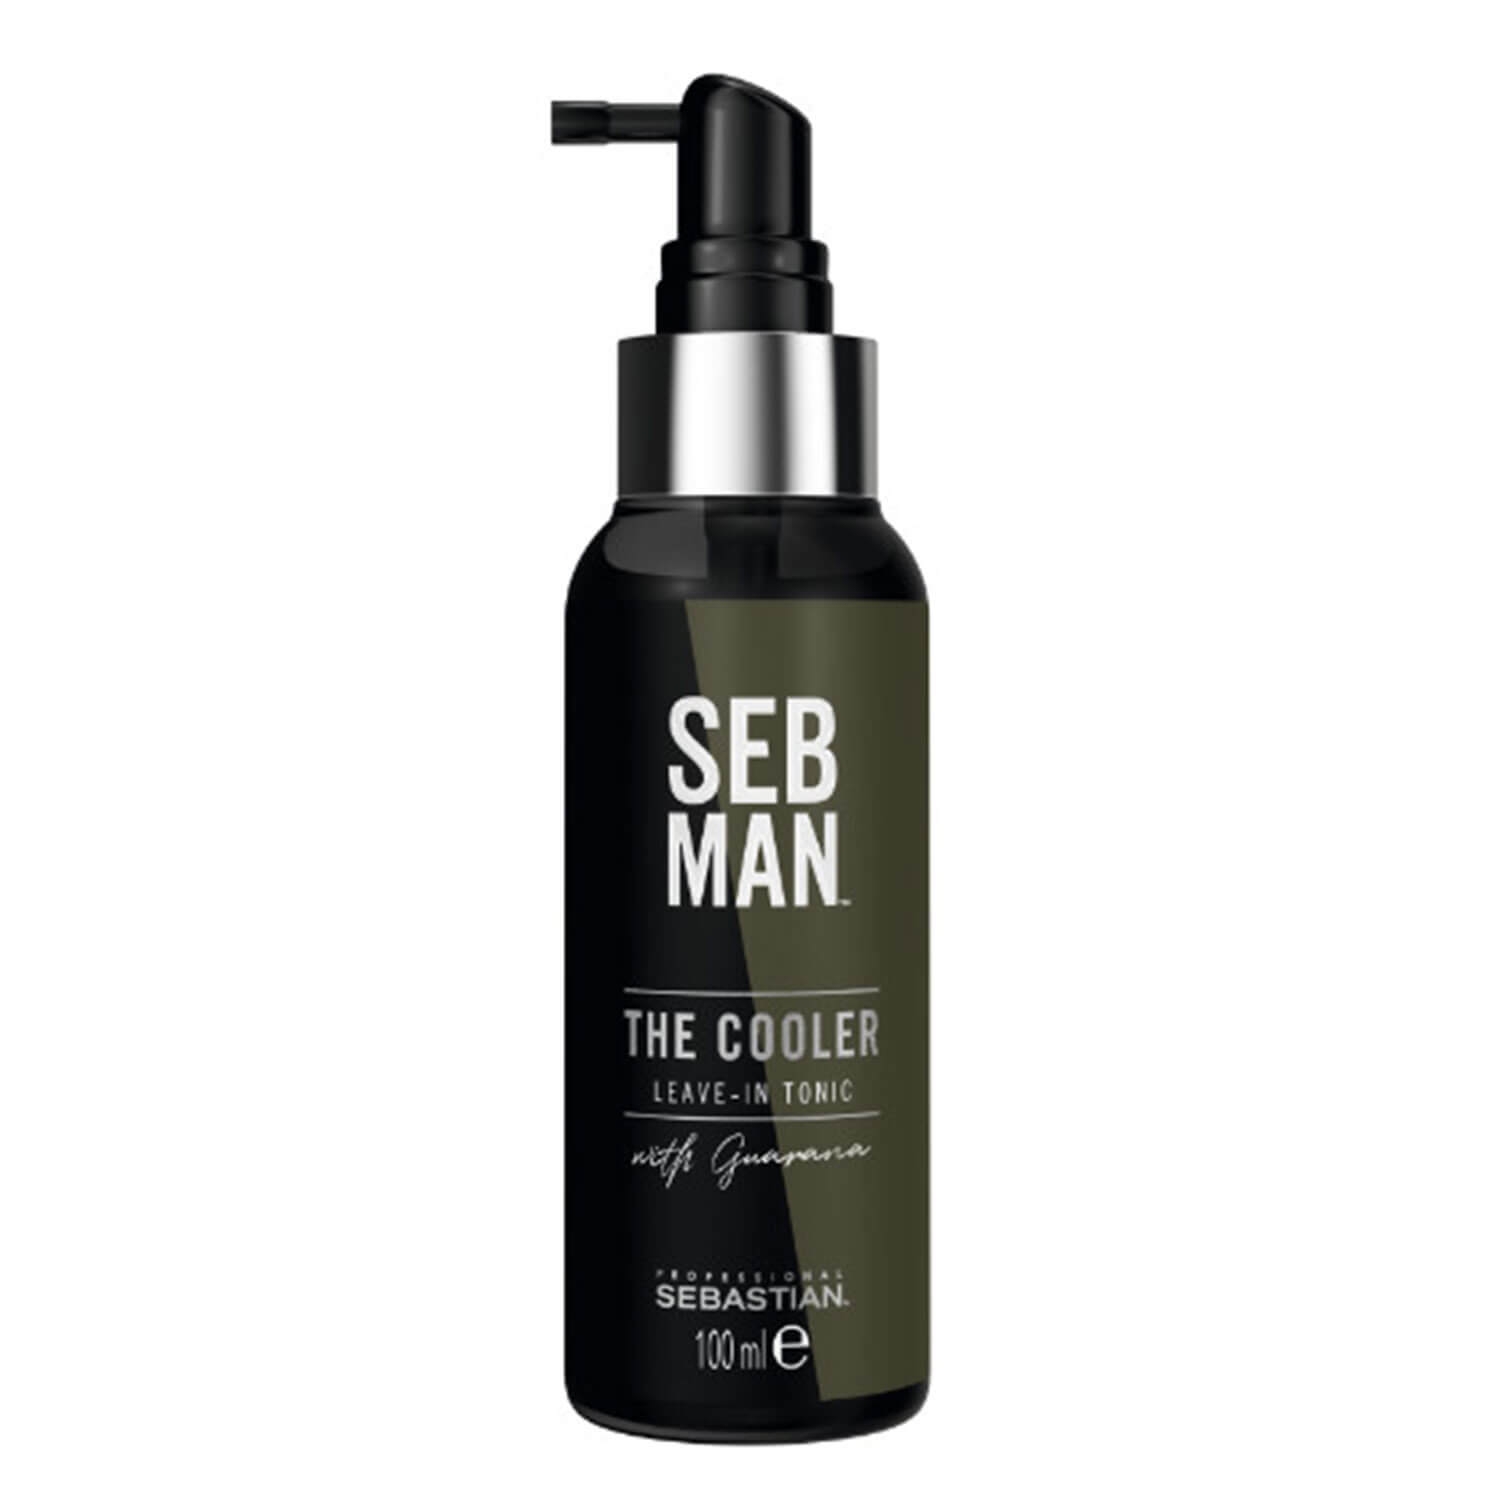 Produktbild von SEB MAN - The Cooler Refreshing Leave-In Tonic